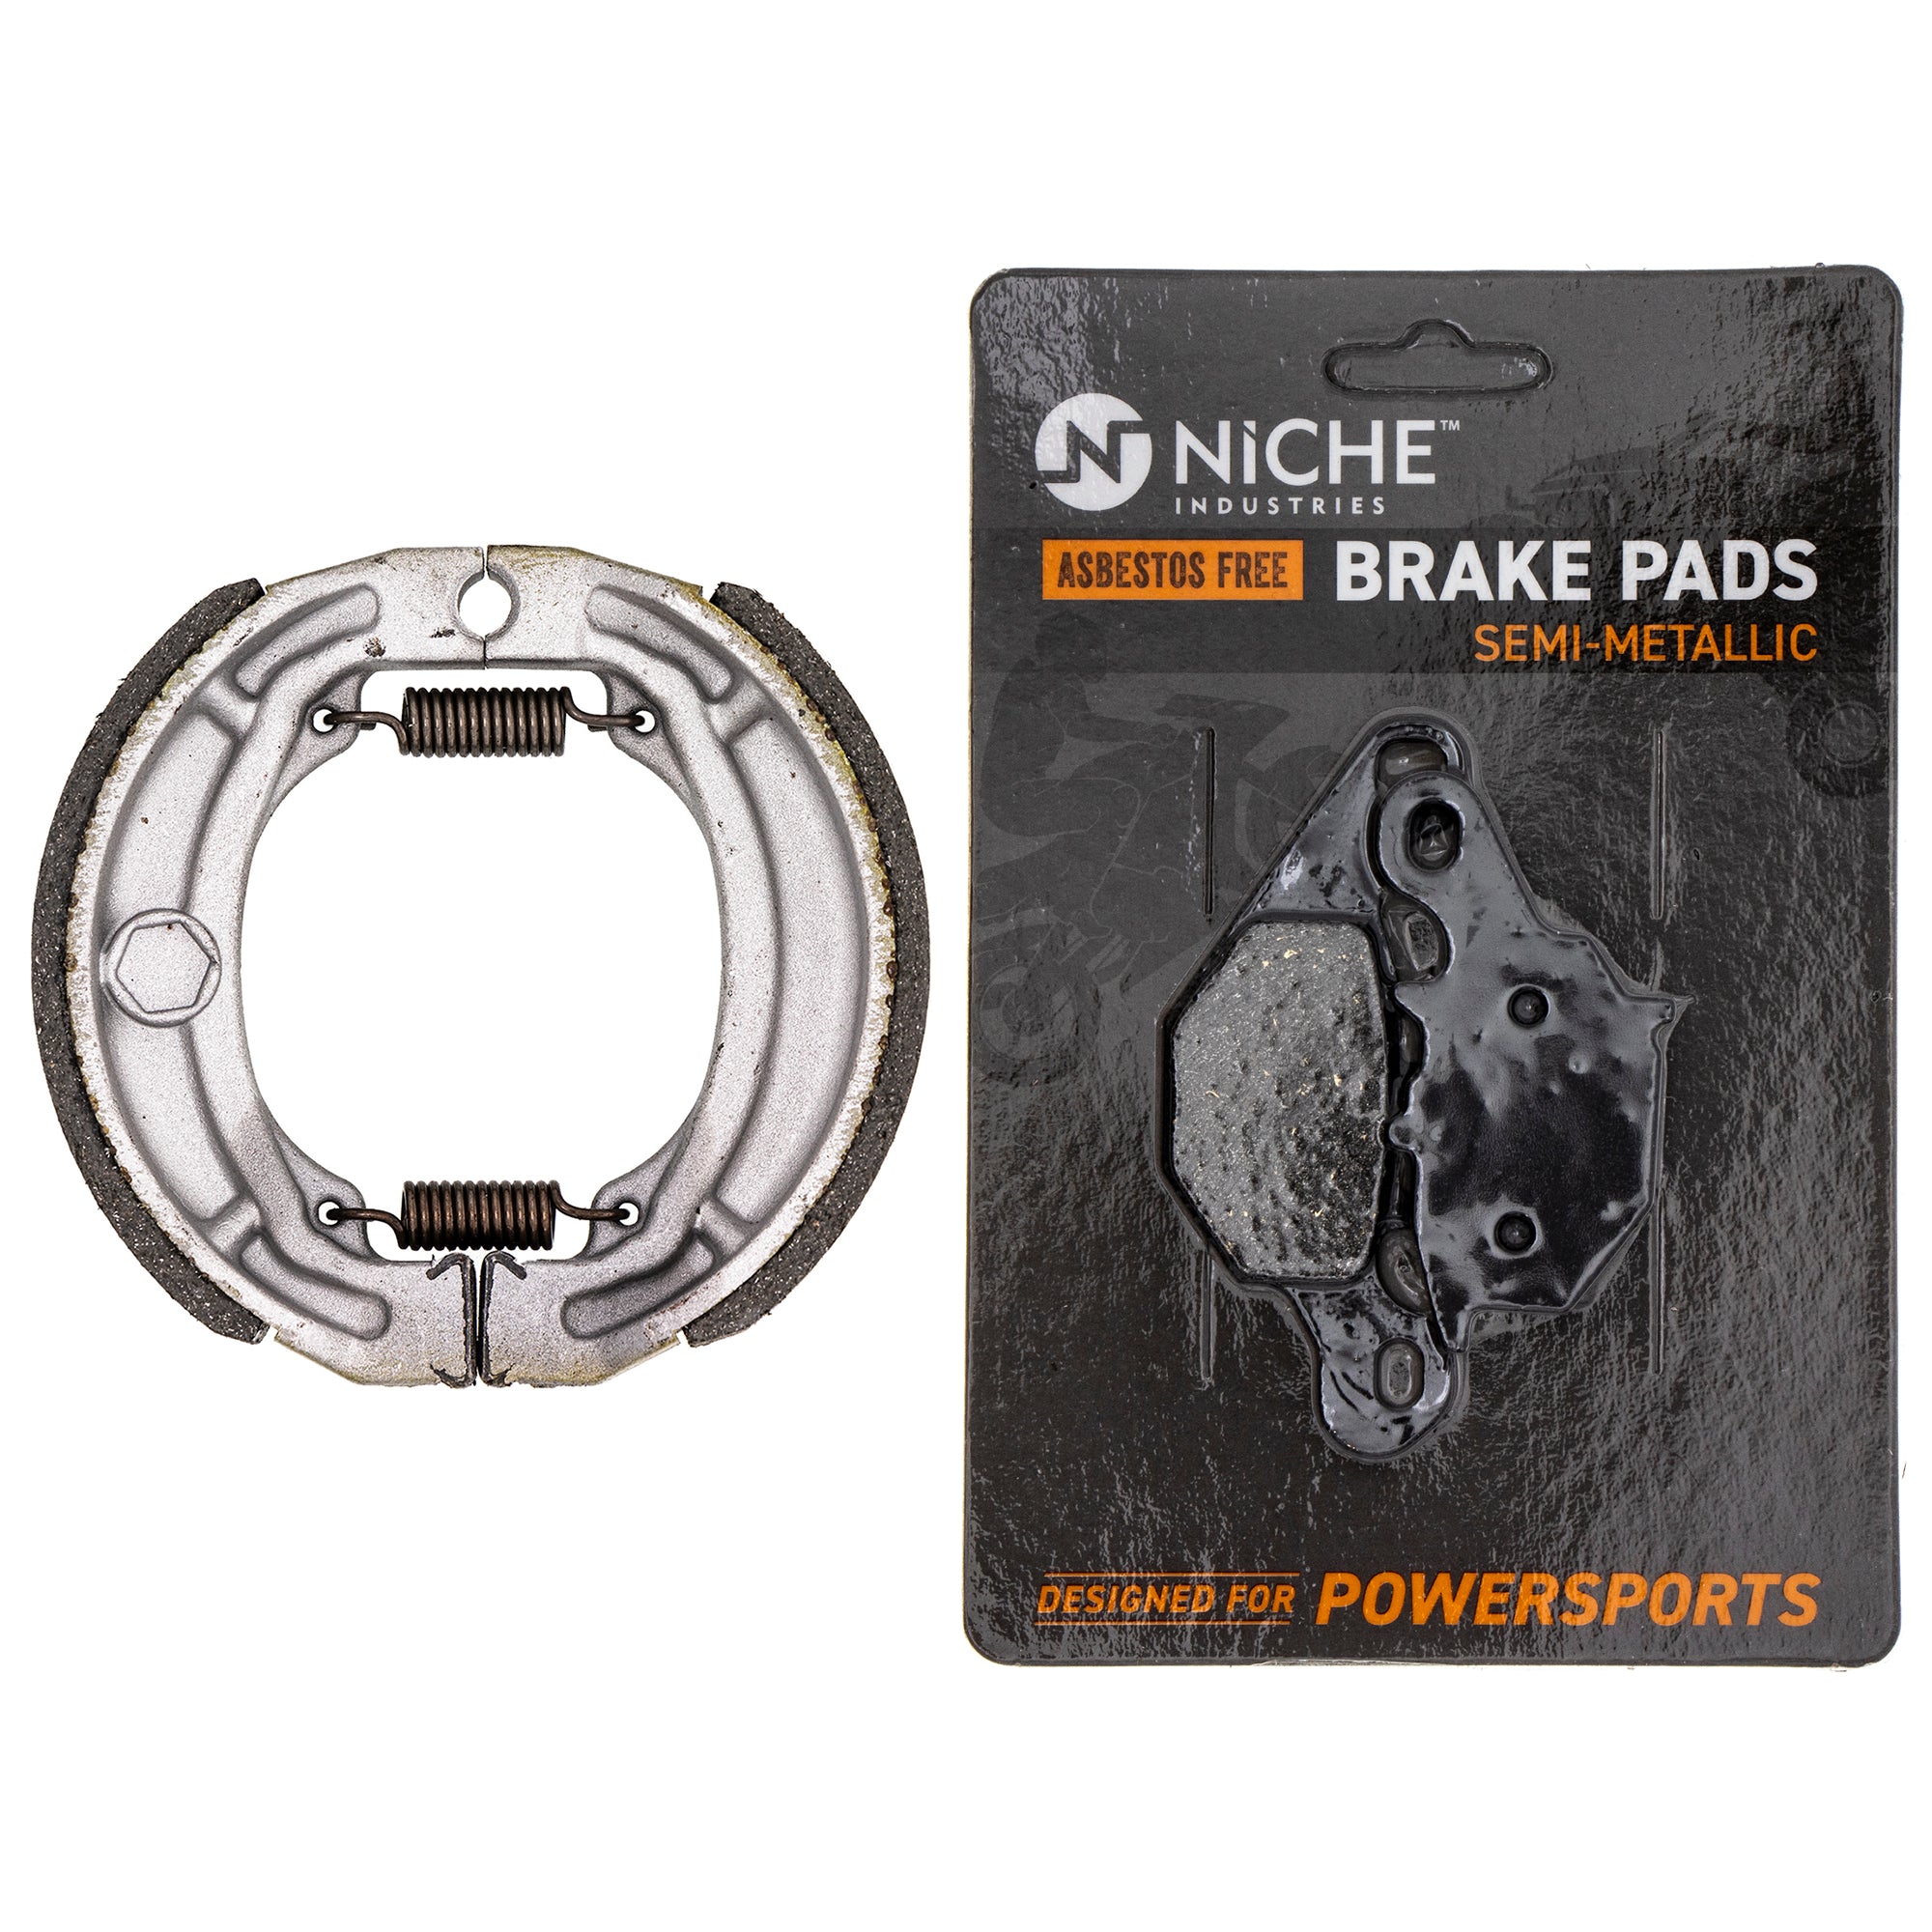 Full Semi-Metallic brake Pad & Shoe Set for Suzuki DRZ125 54401-43840 59301-20870 NICHE MK1002796